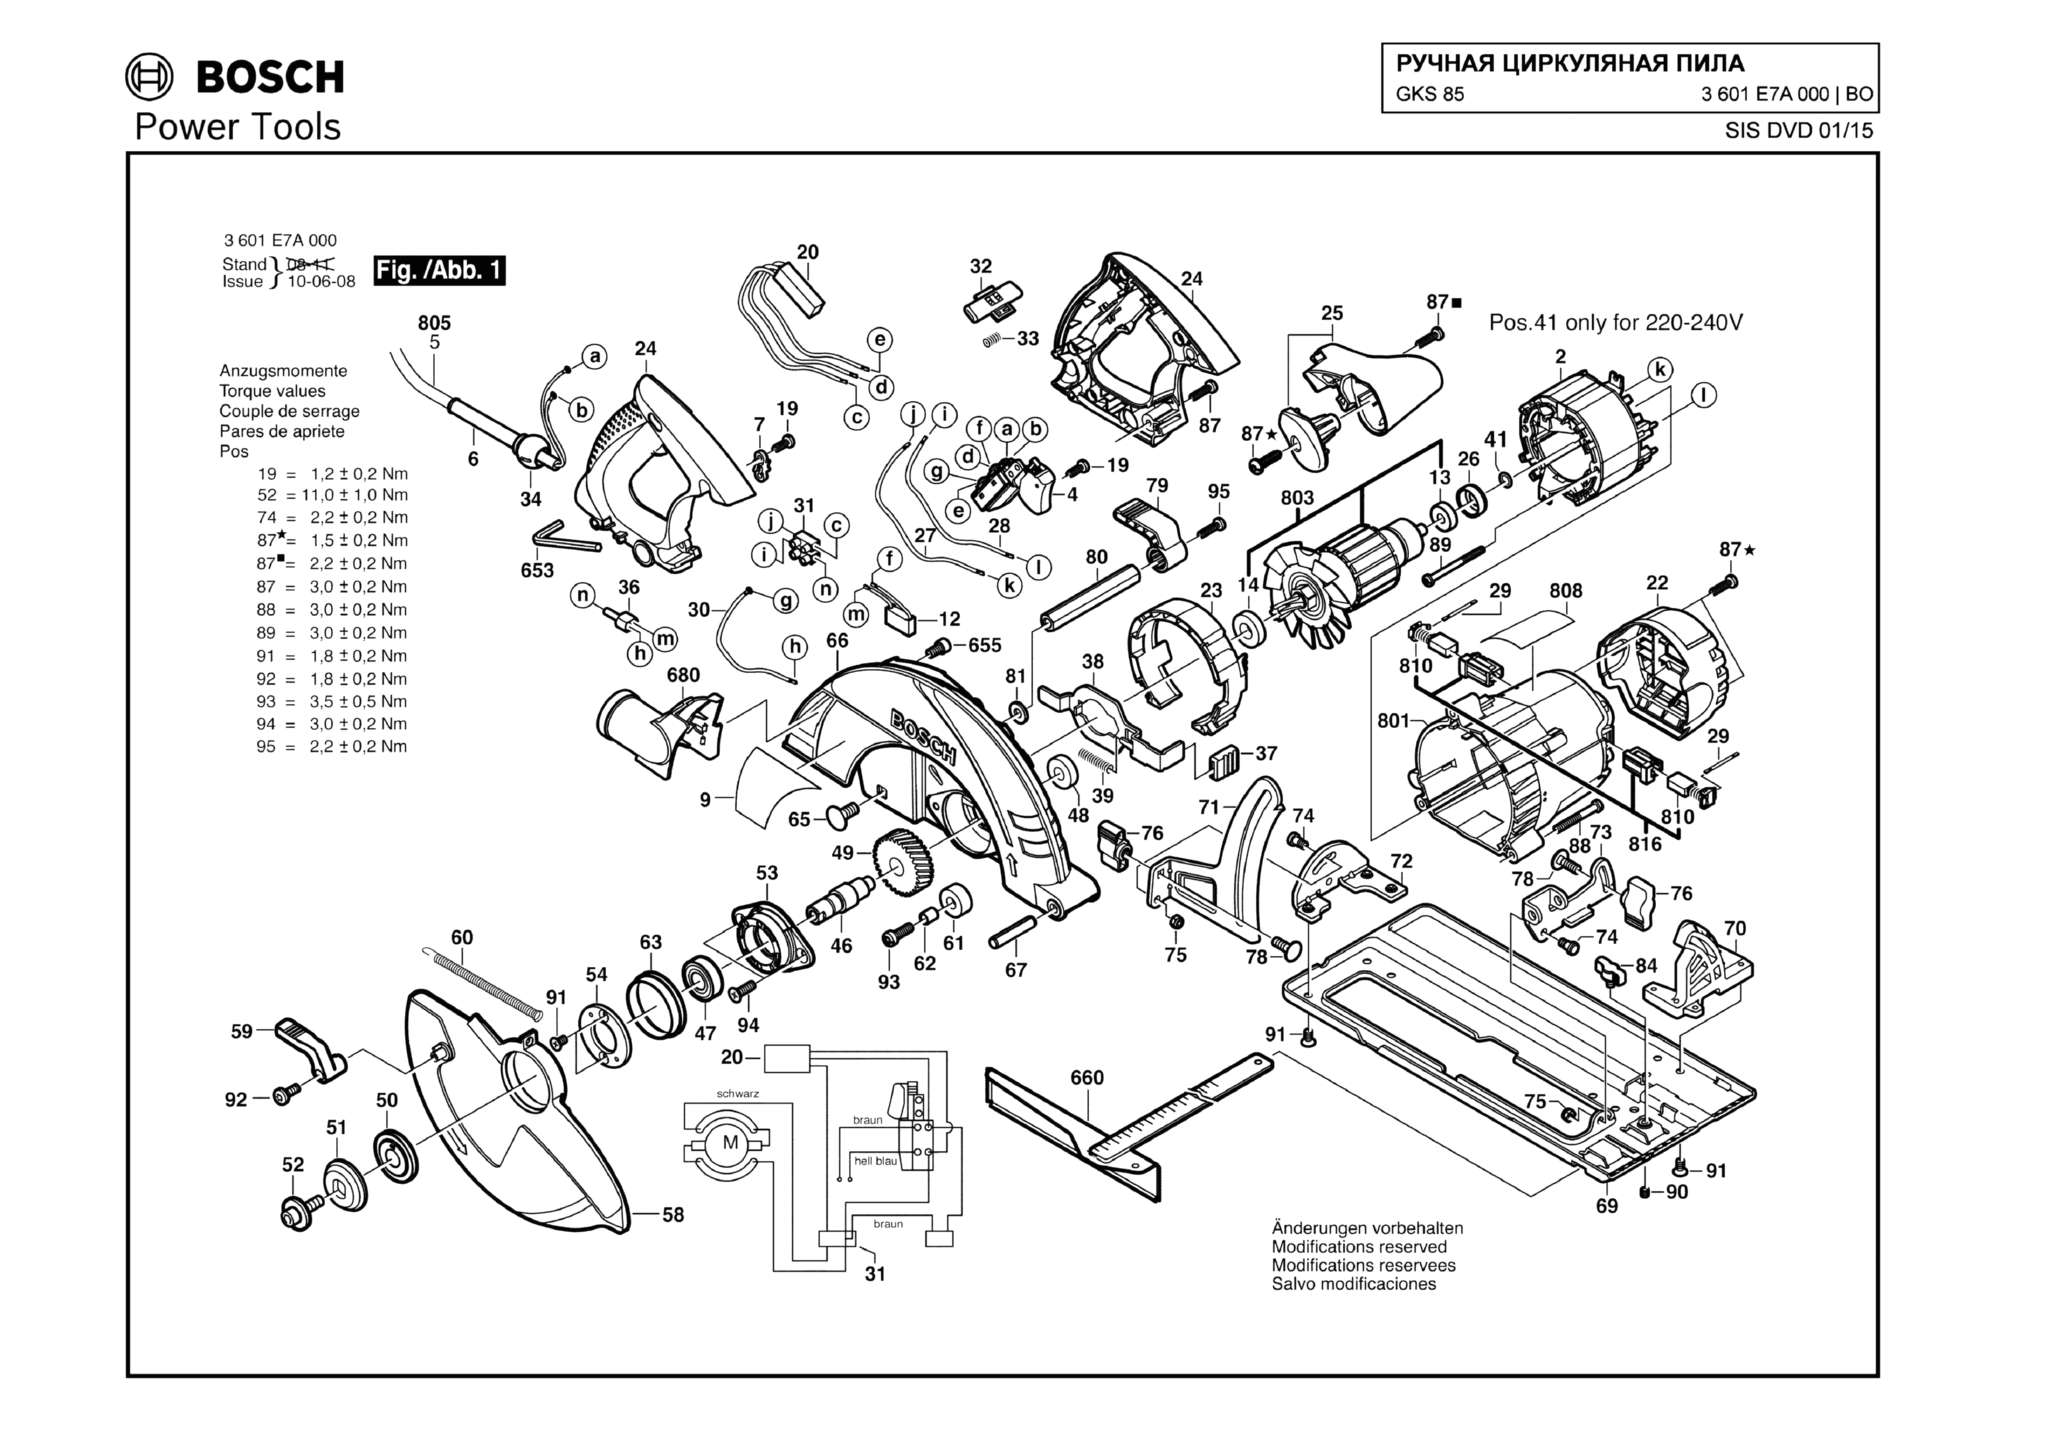 Запчасти, схема и деталировка Bosch GKS 85 (ТИП 3601E7A000)